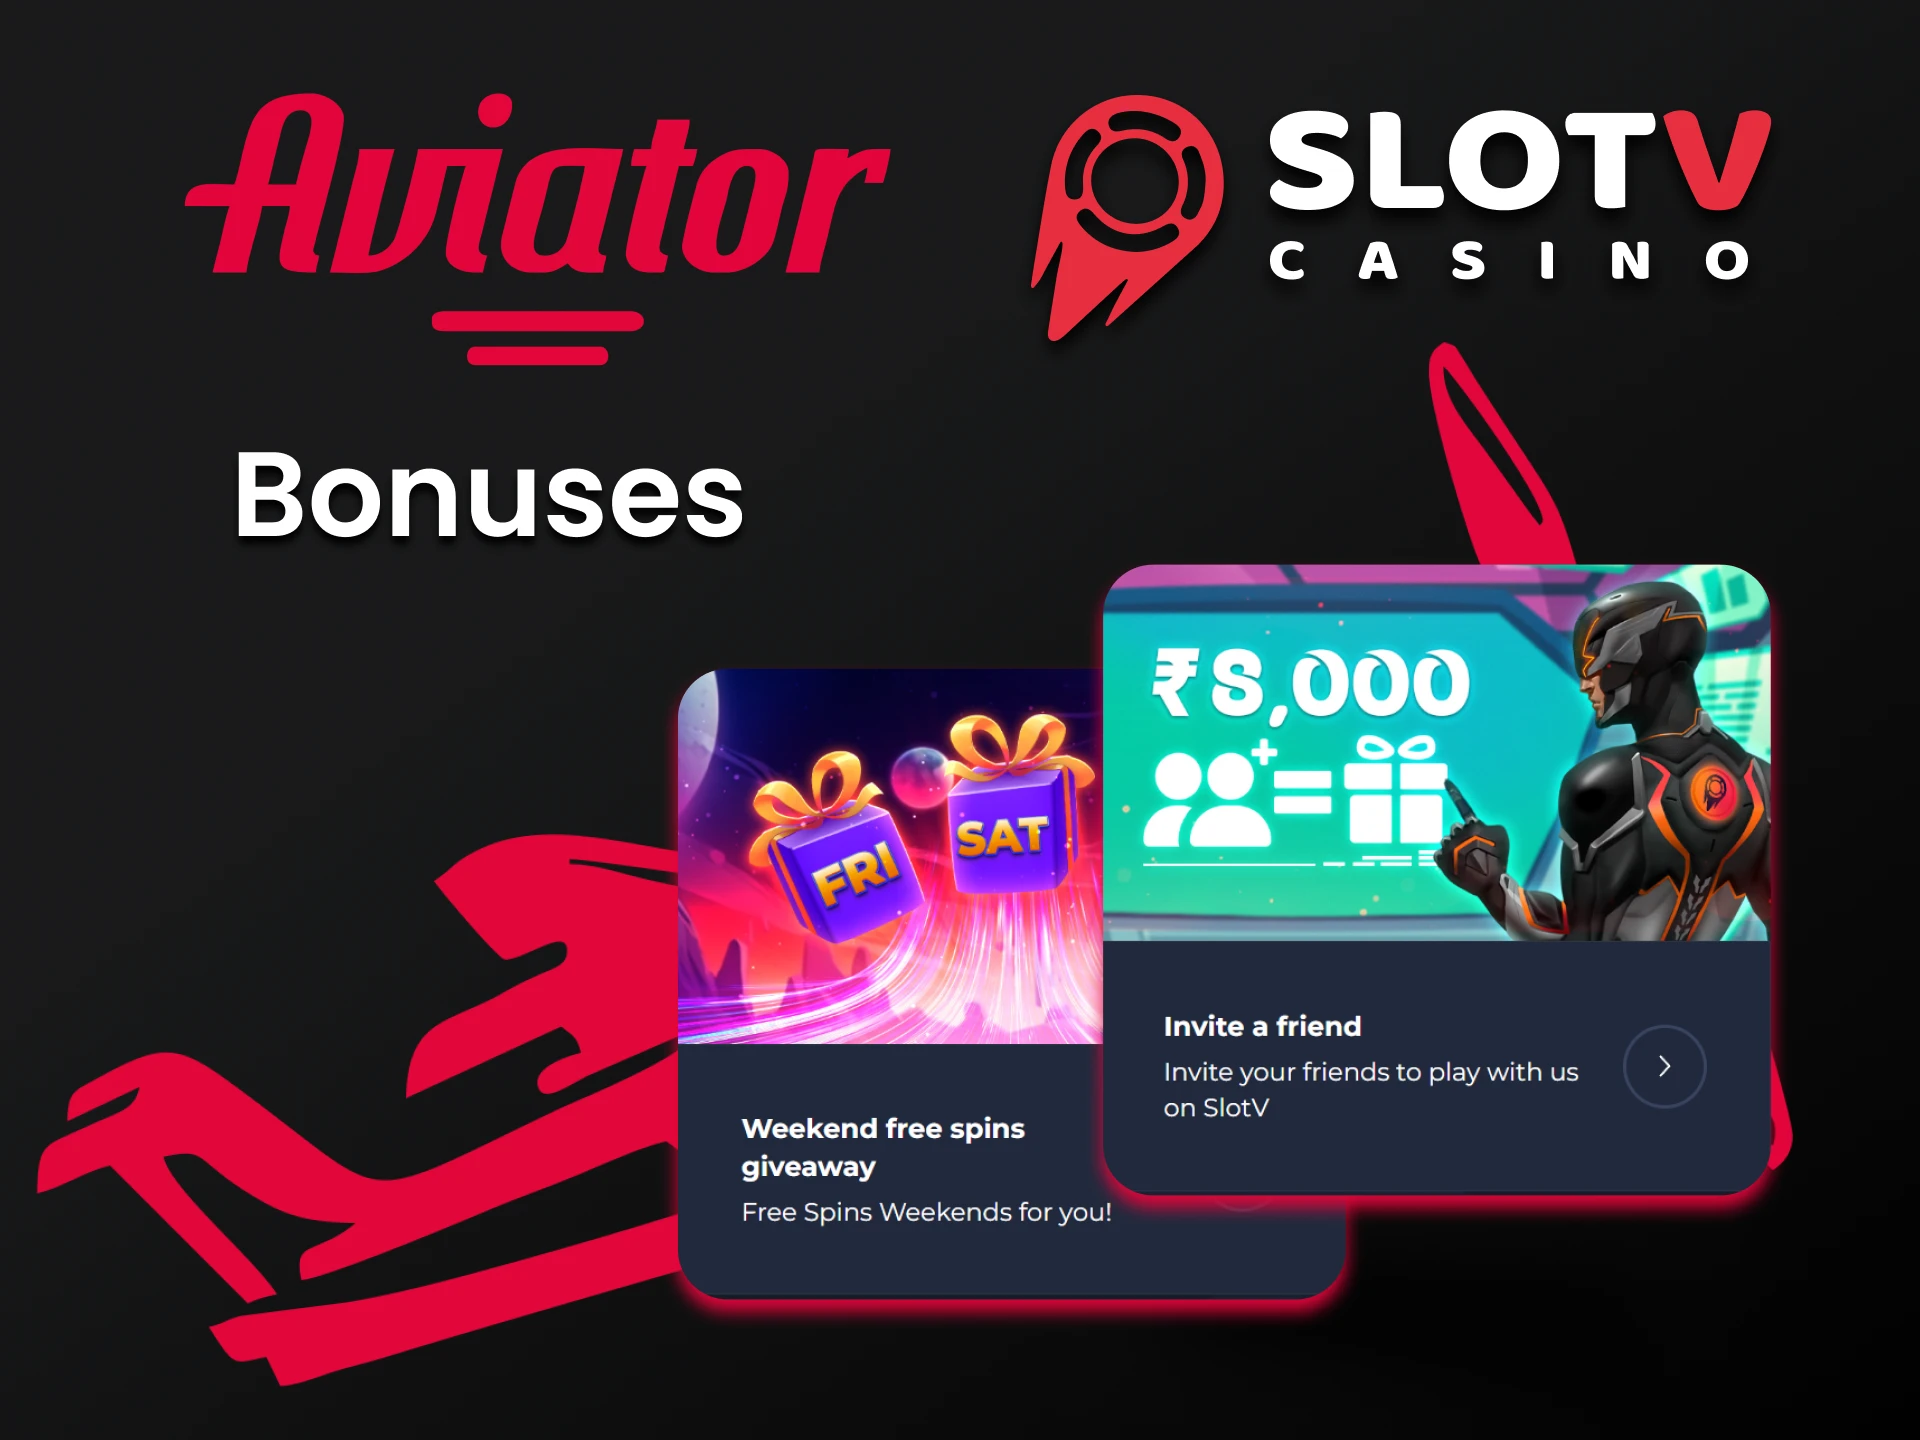 Get bonuses for playing Aviator through the SlotV app.